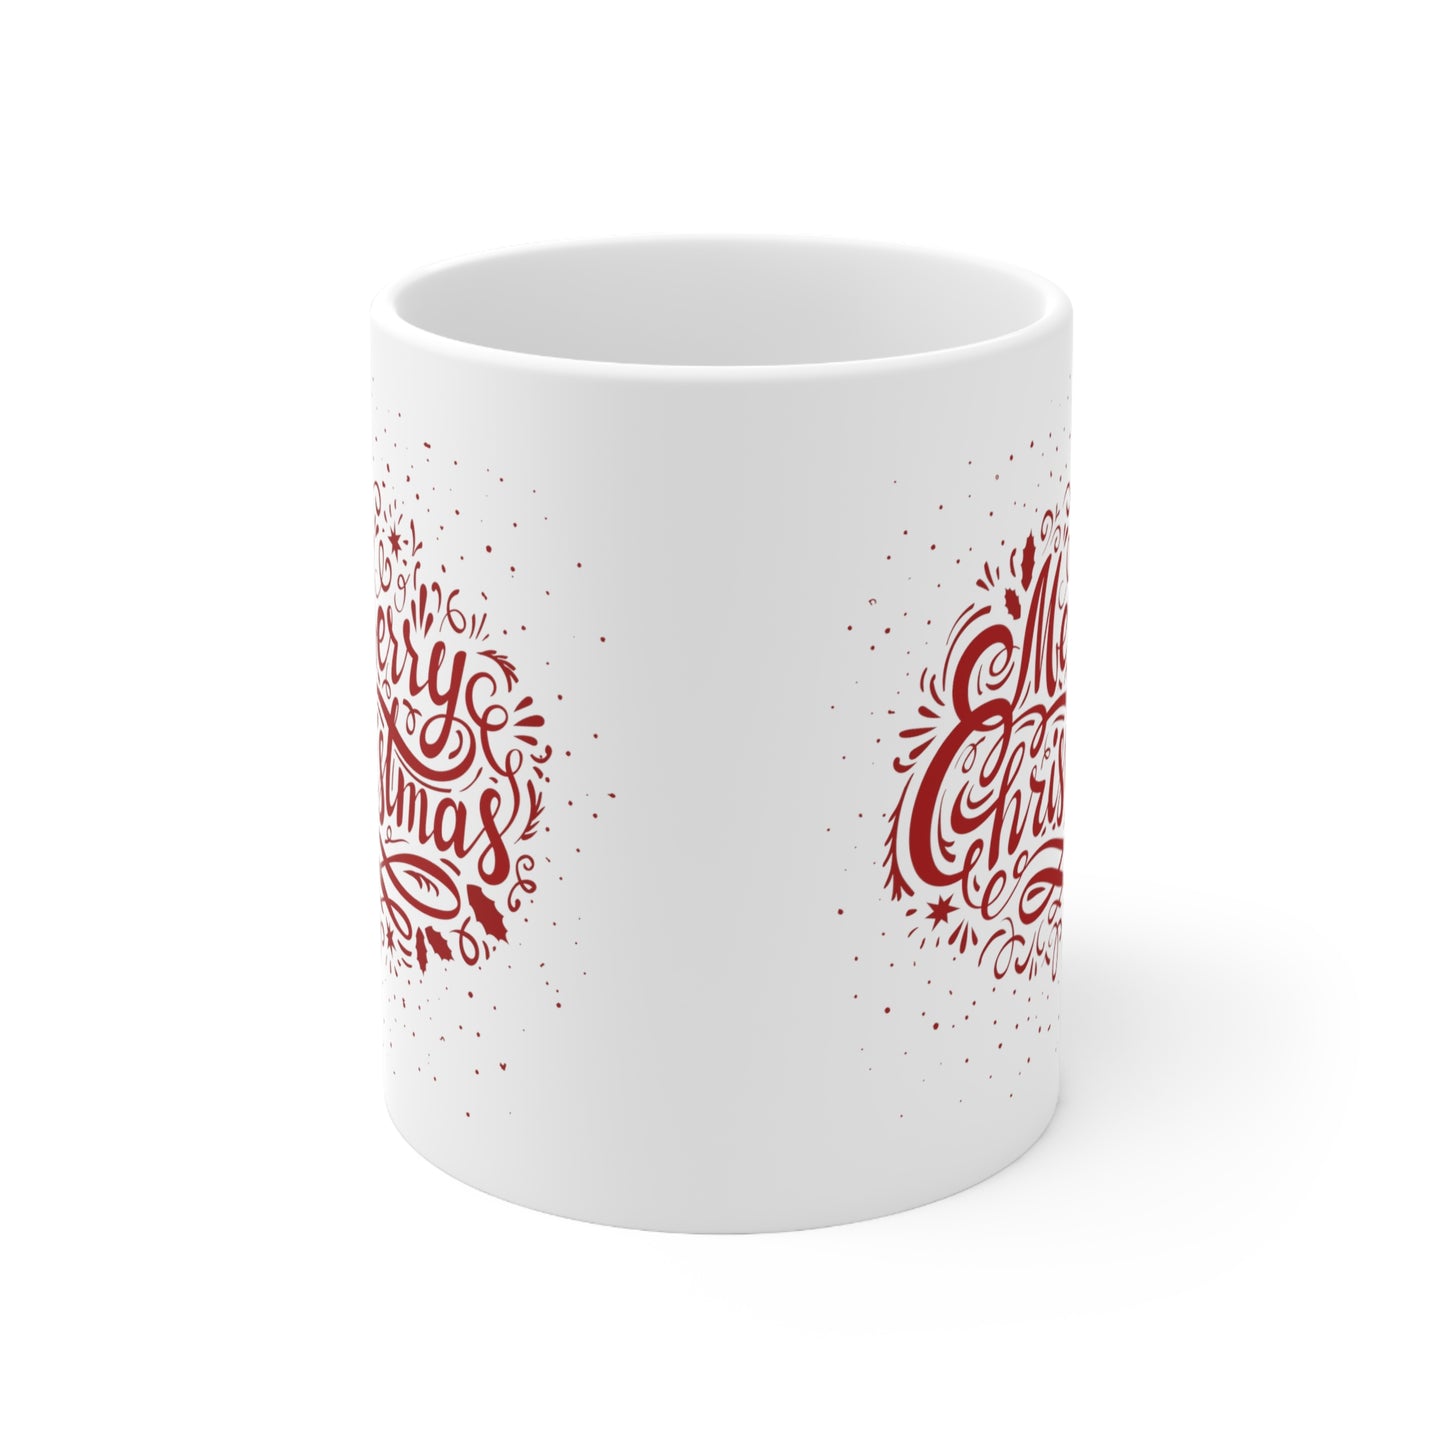 Merry Christmas Printed Ceramic Coffee Mug, 11oz, Red